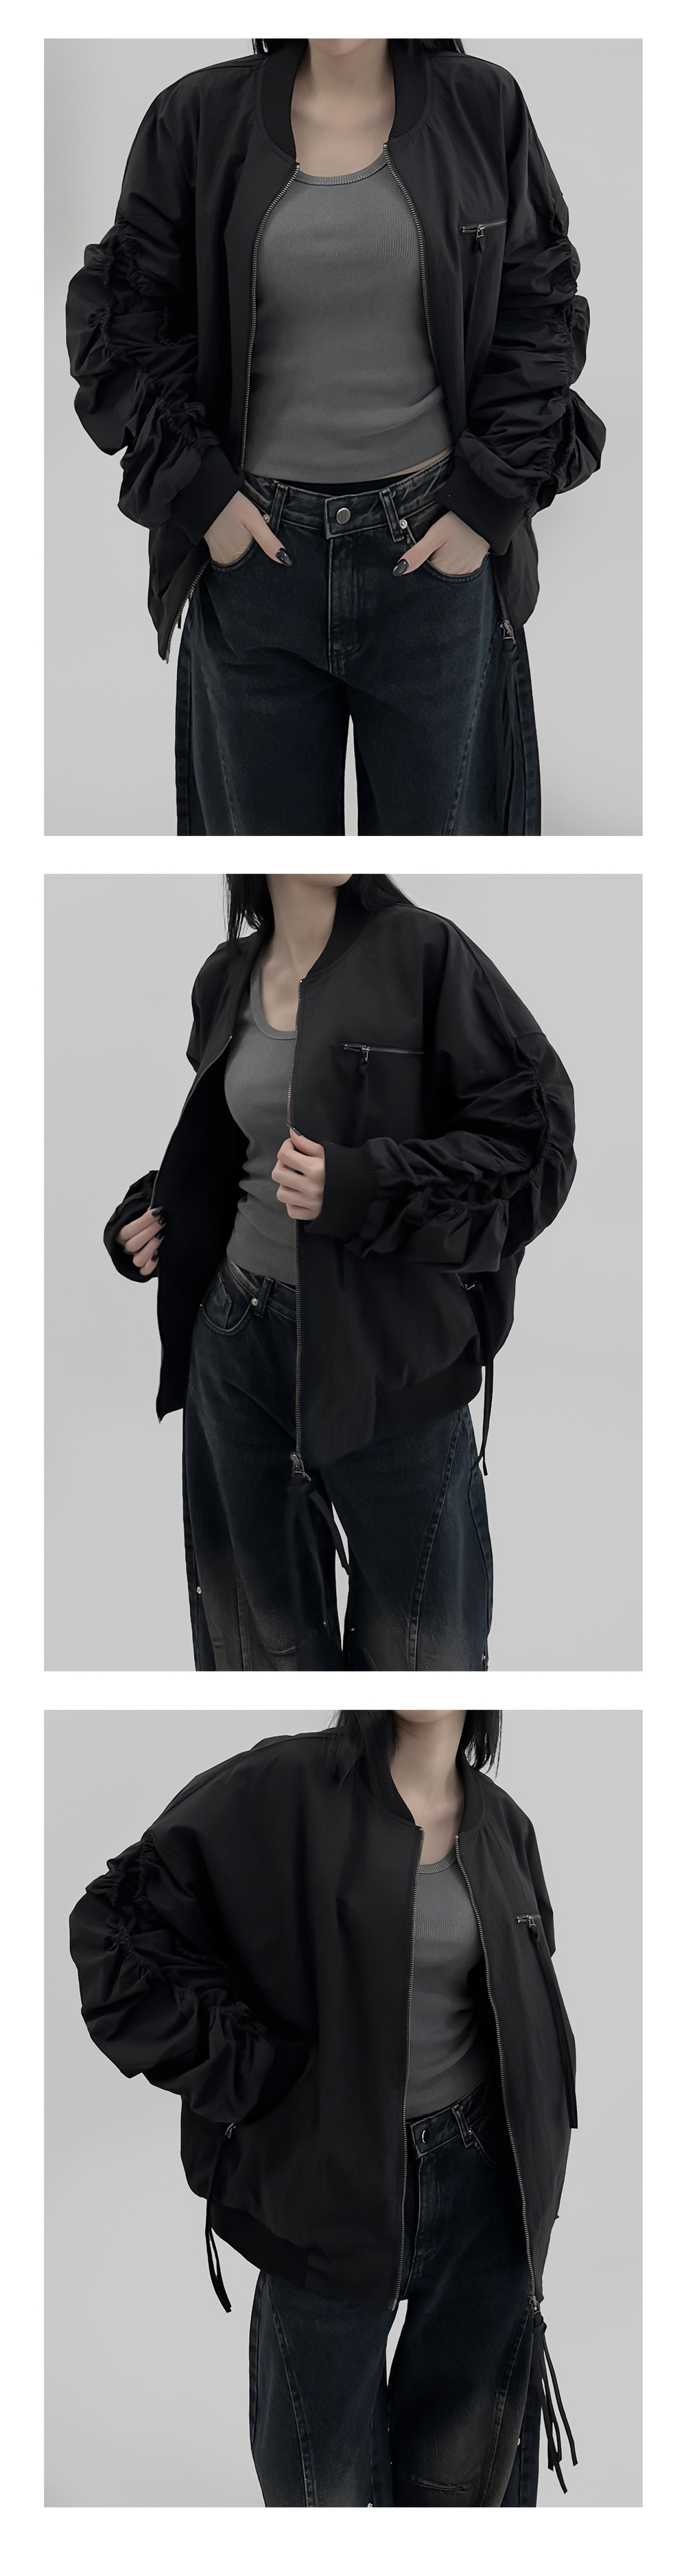 jacket charcoal color image-S1L15